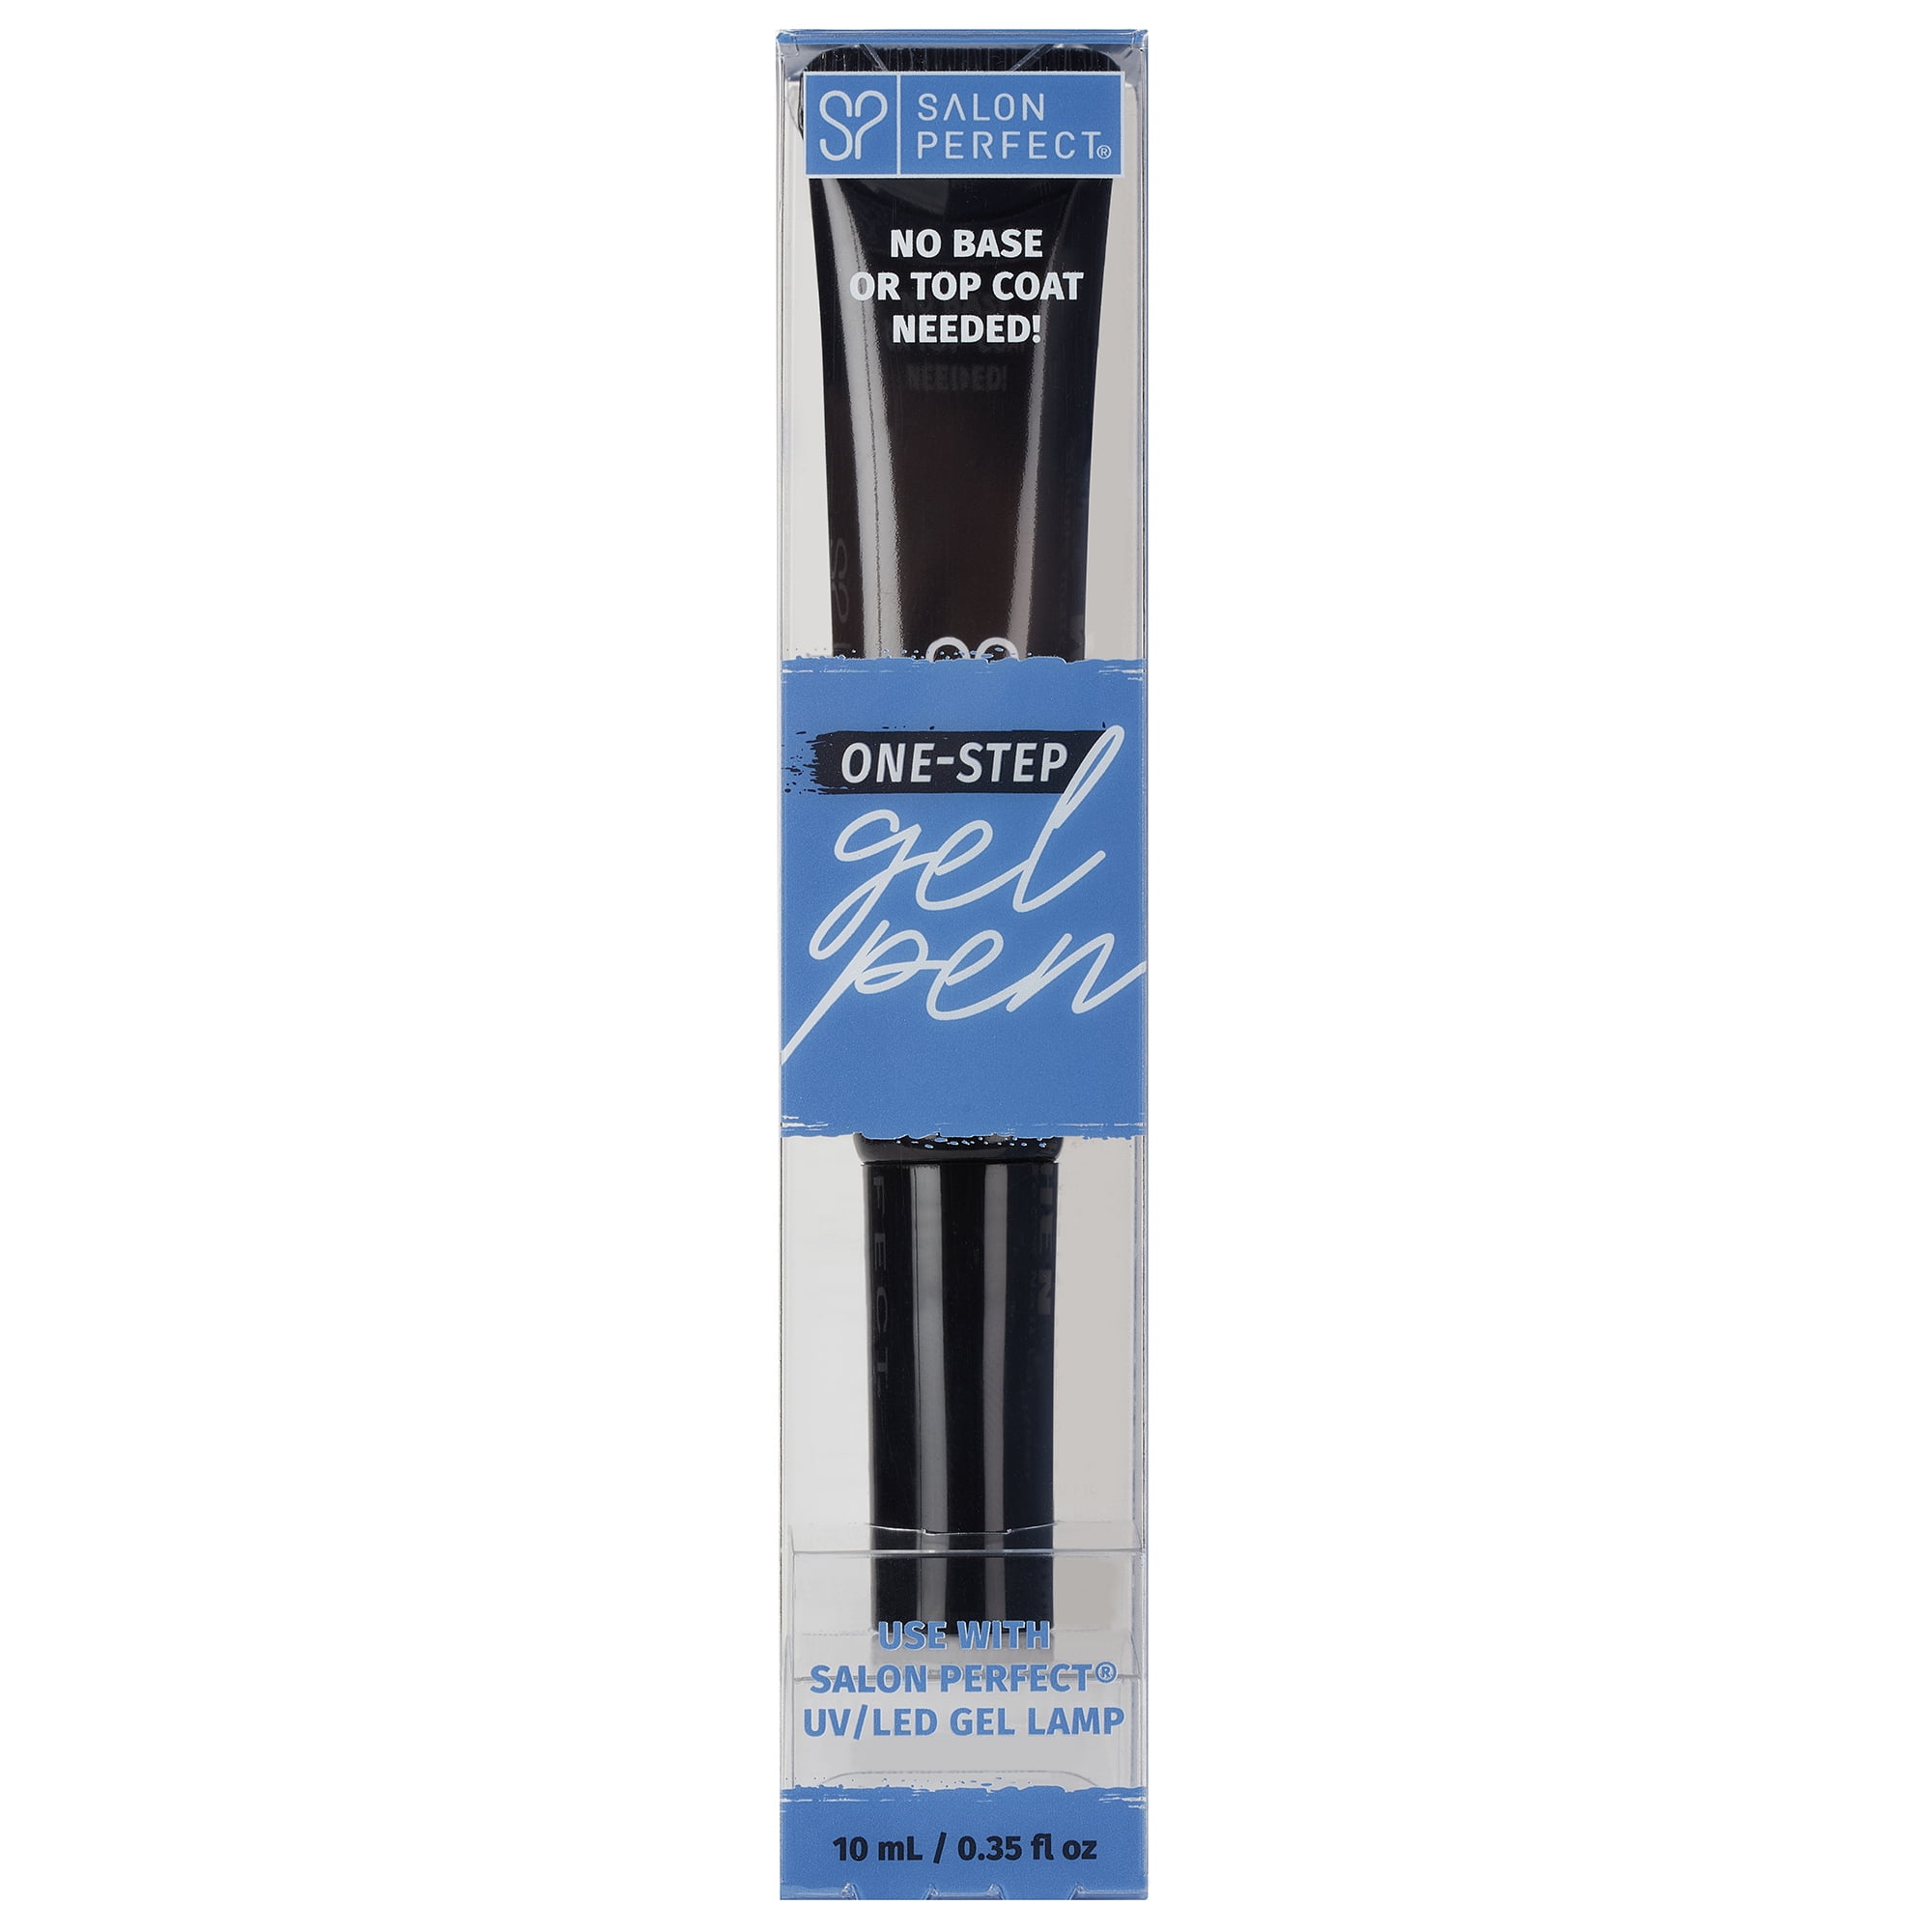 Salon Perfect One-Step Gel Pen, Way Back When, 0.3 fl oz